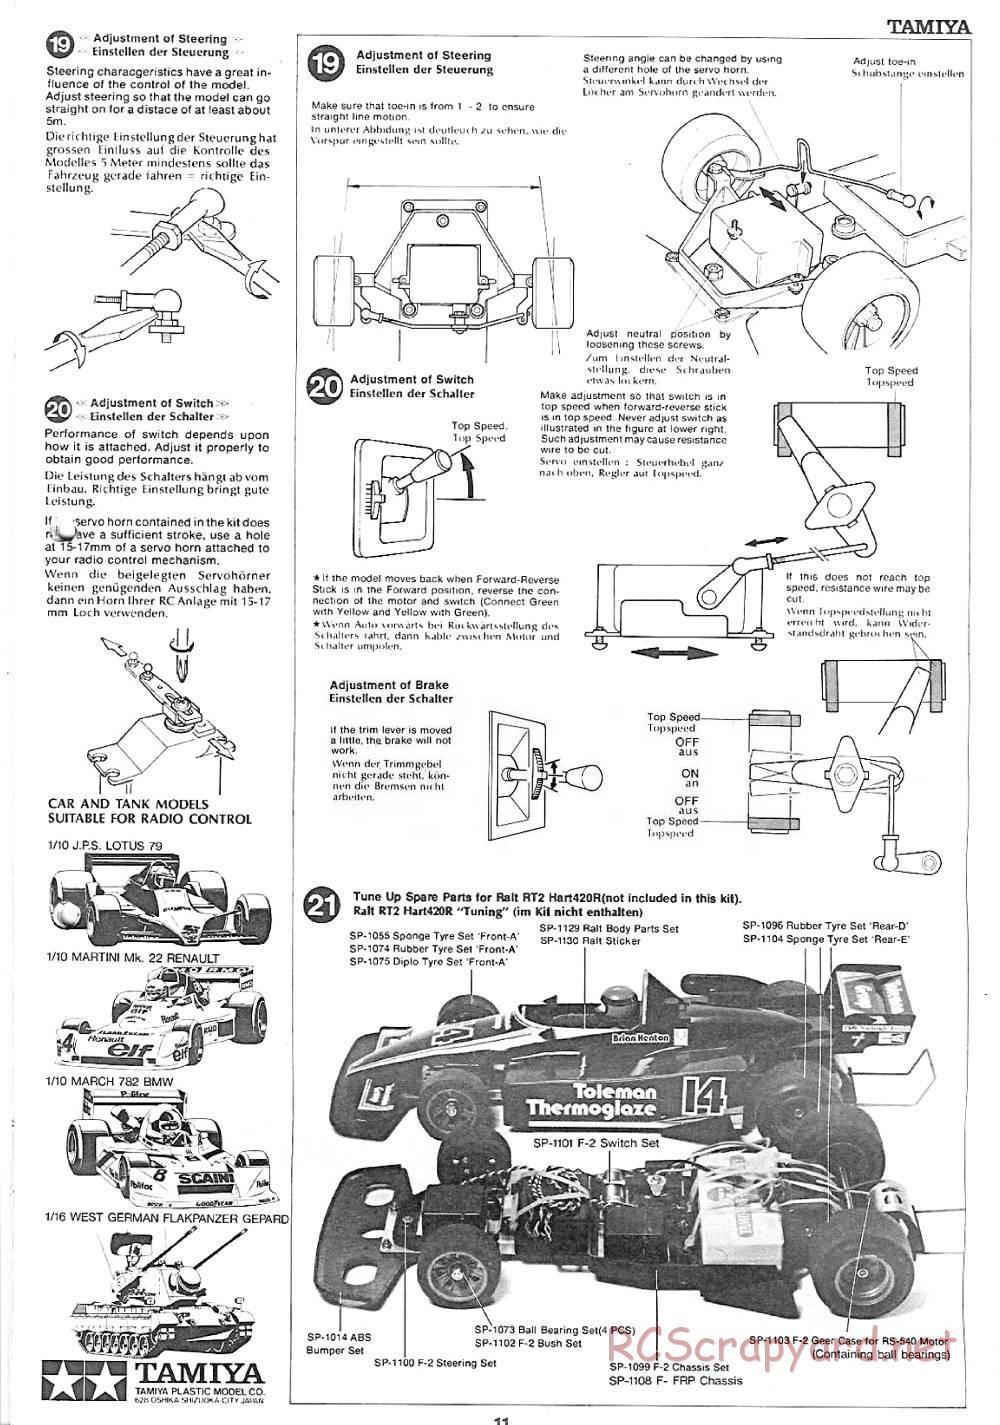 Tamiya - Ralt RT2 Hart 420R (F2) - 58018 - Manual - Page 11